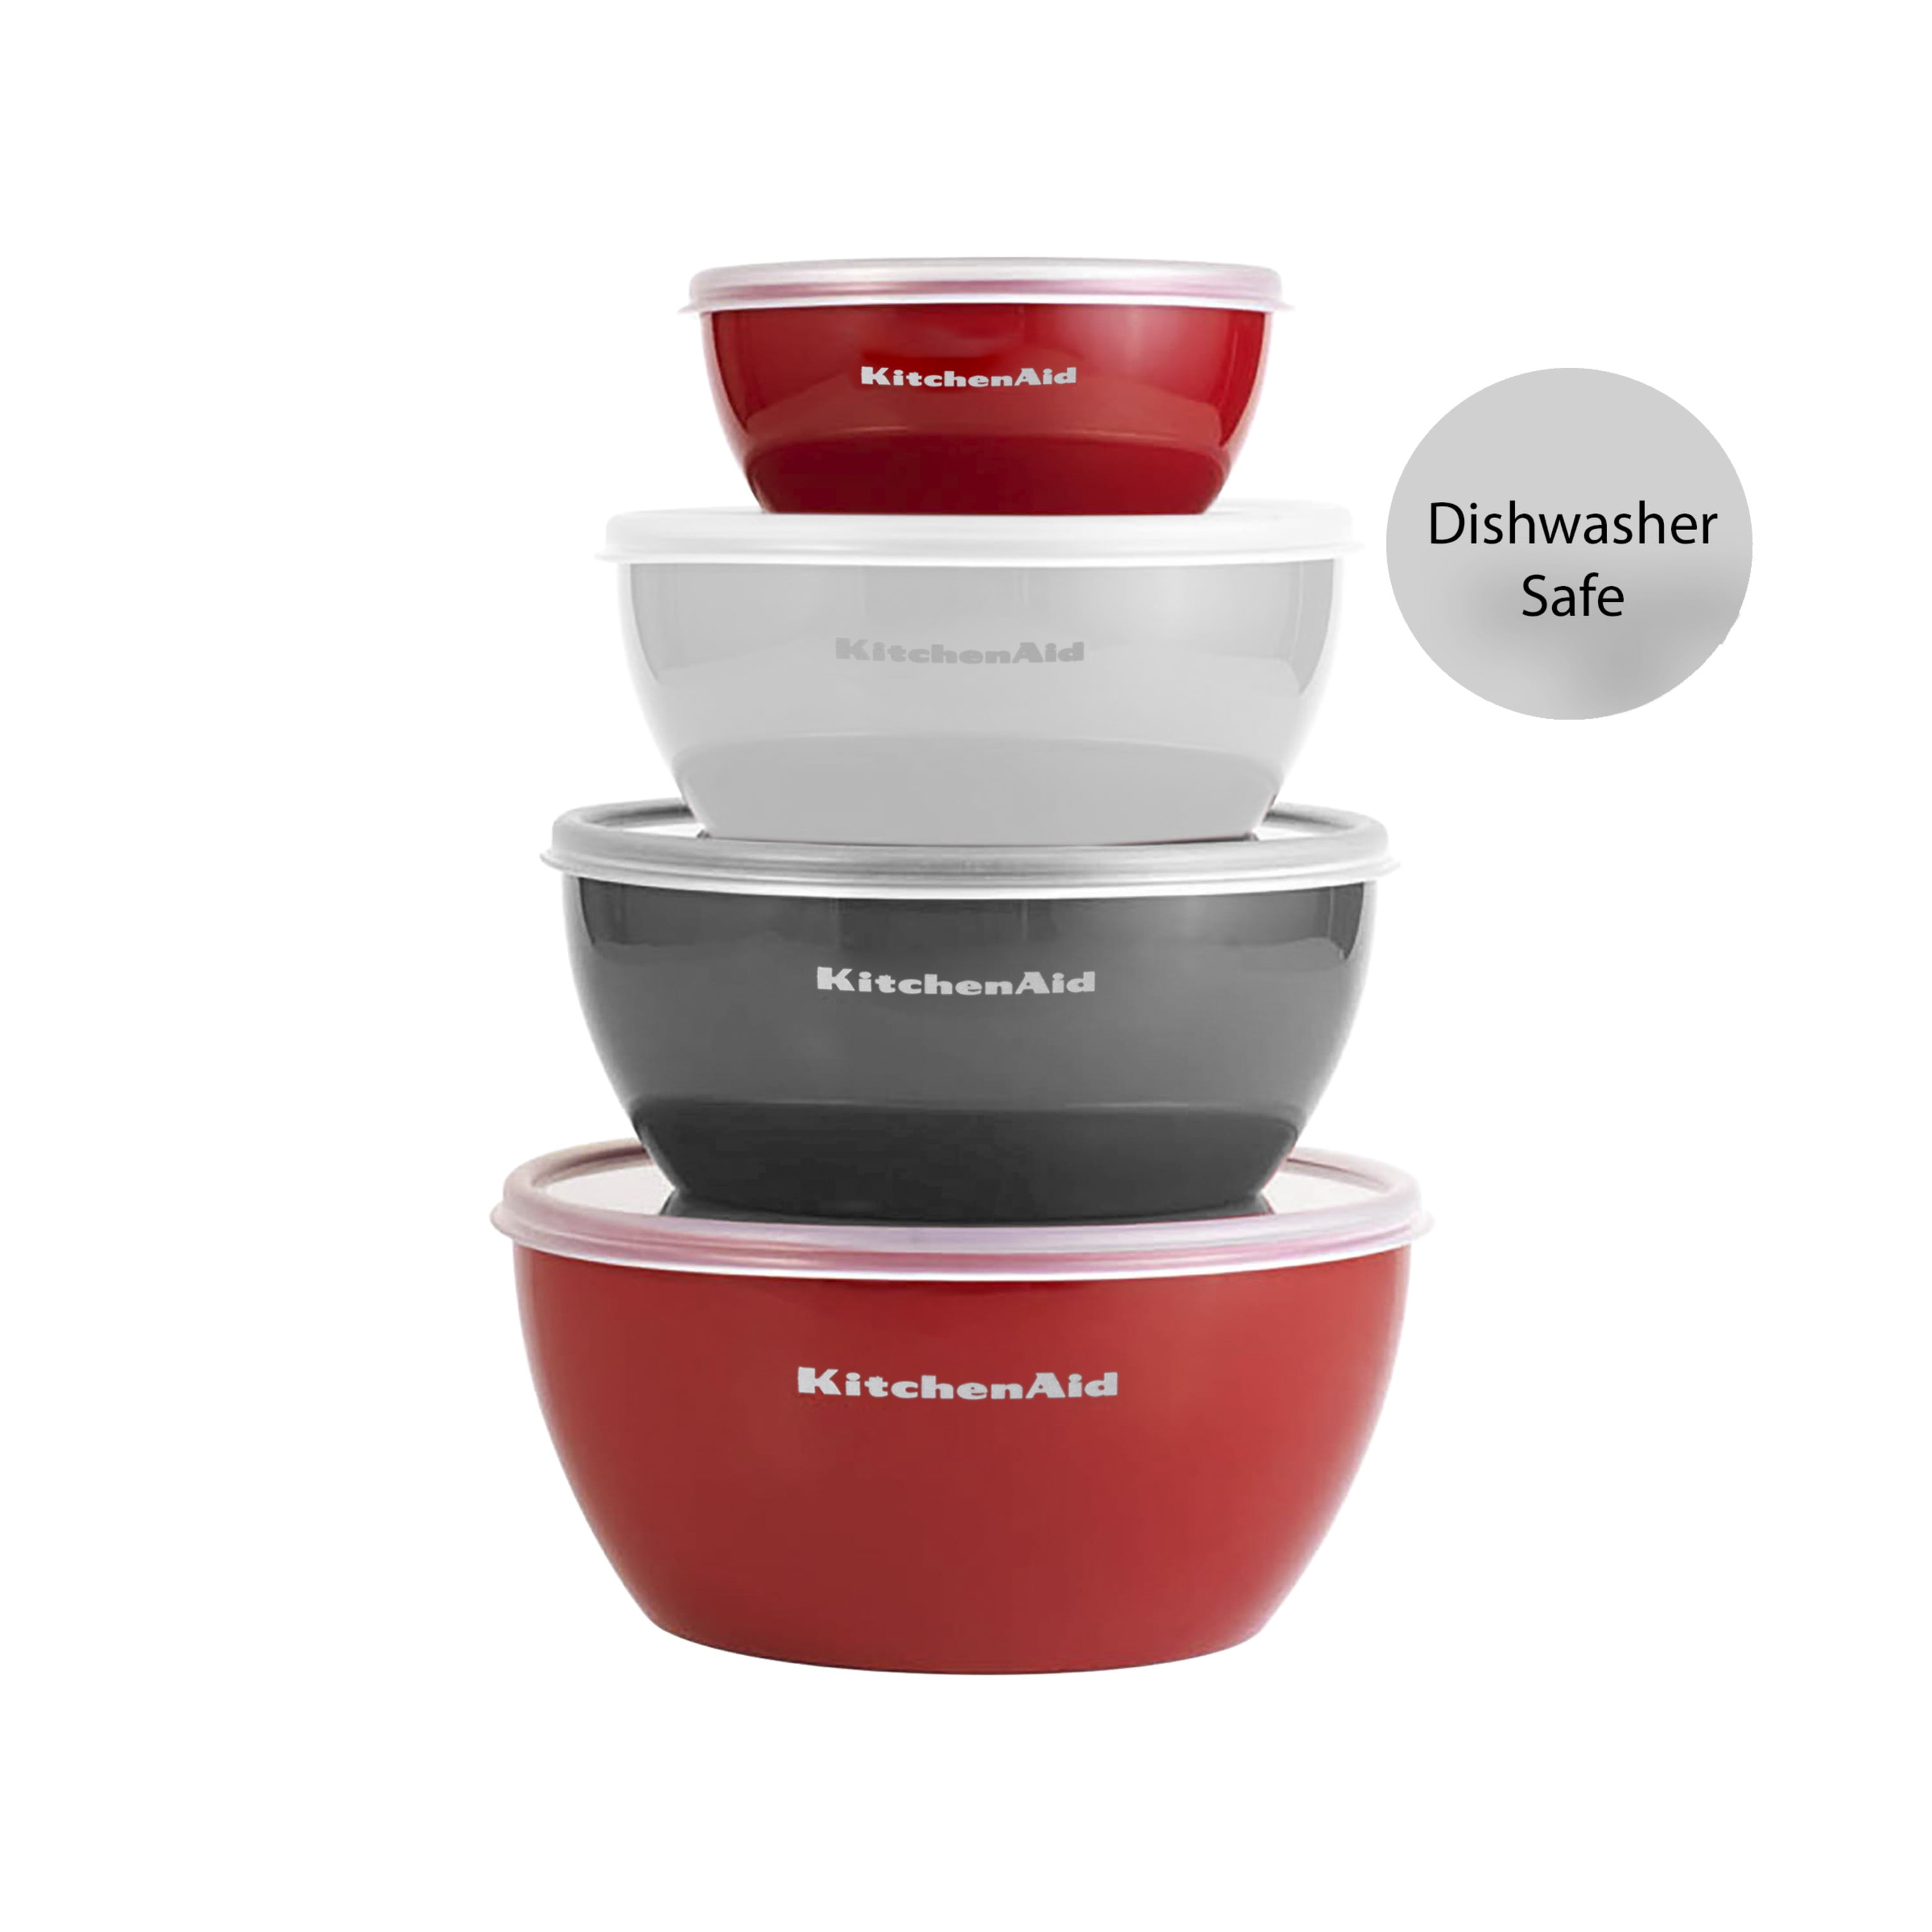 KitchenAid Set of 5 Mixing Bowls - Pistachio - 9755096